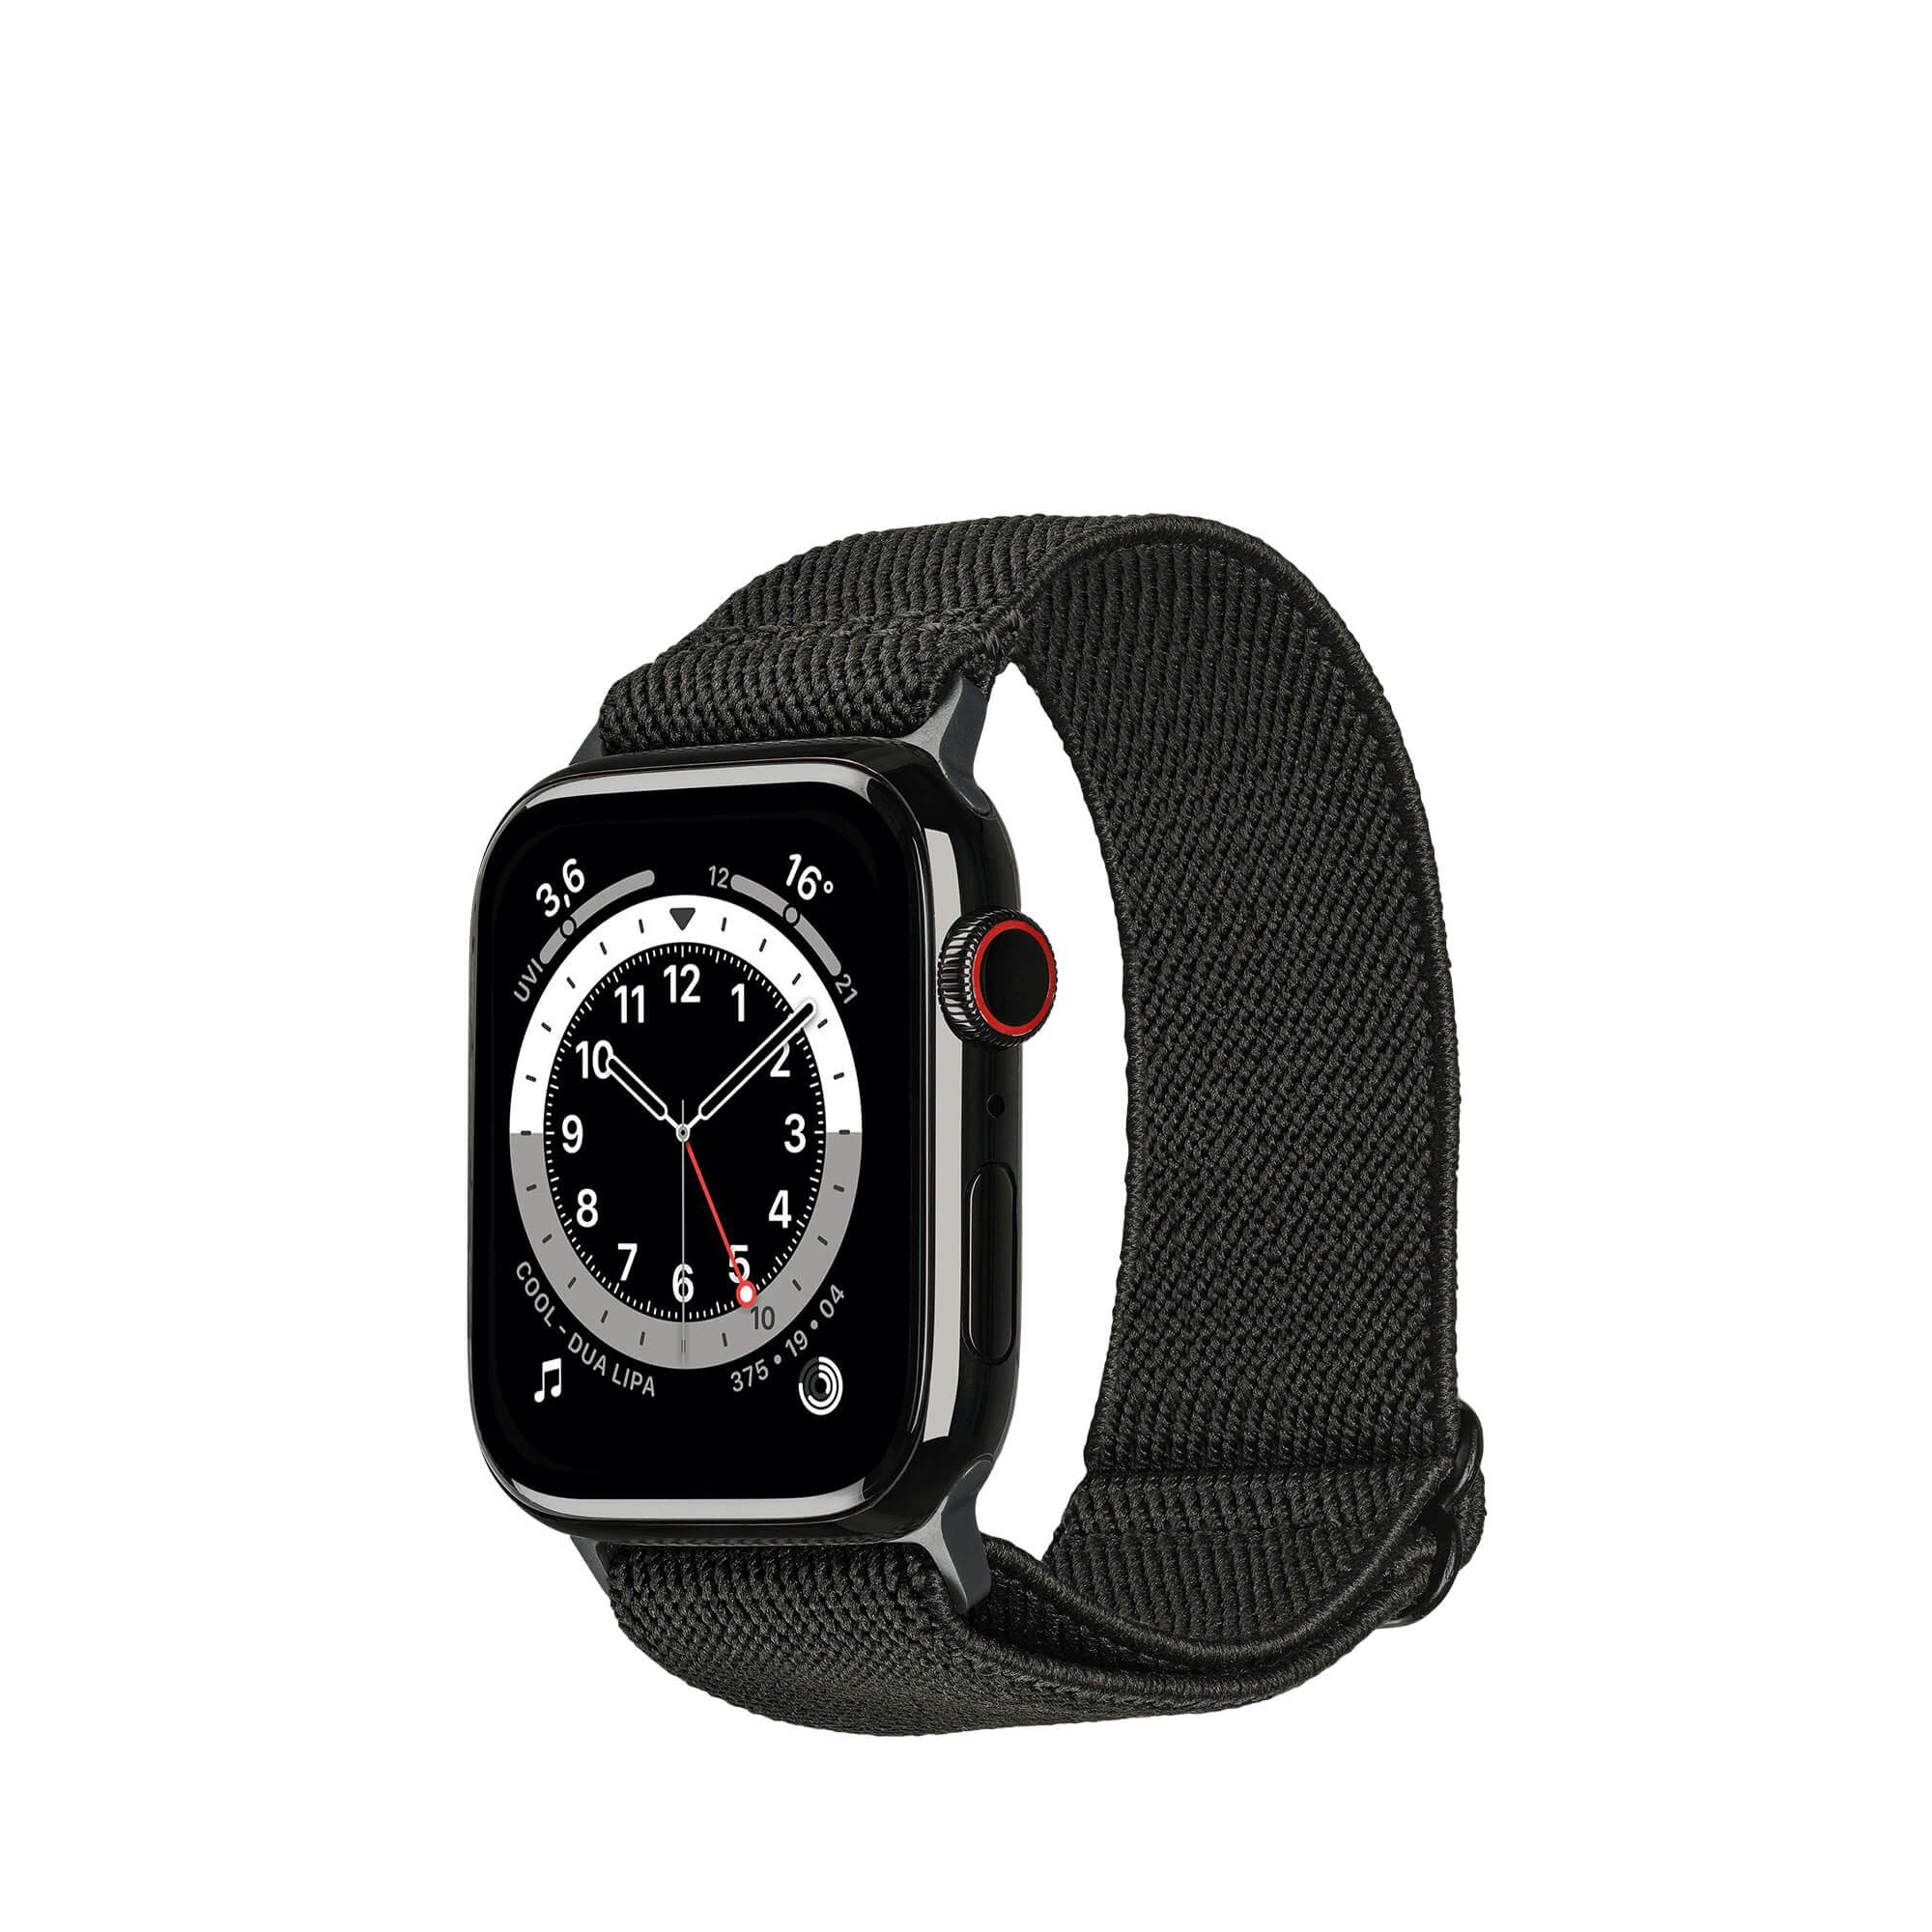 【Vertrauen】 Artwizz Smartwatch-Armband WatchBand Adapter, Uhrenarmband / Apple Flex, Ultra (42mm) Space-Grau, 6-4 SE (45mm), Textil 3-1 (44mm), 9-7 (49mm), 2 & Watch mit